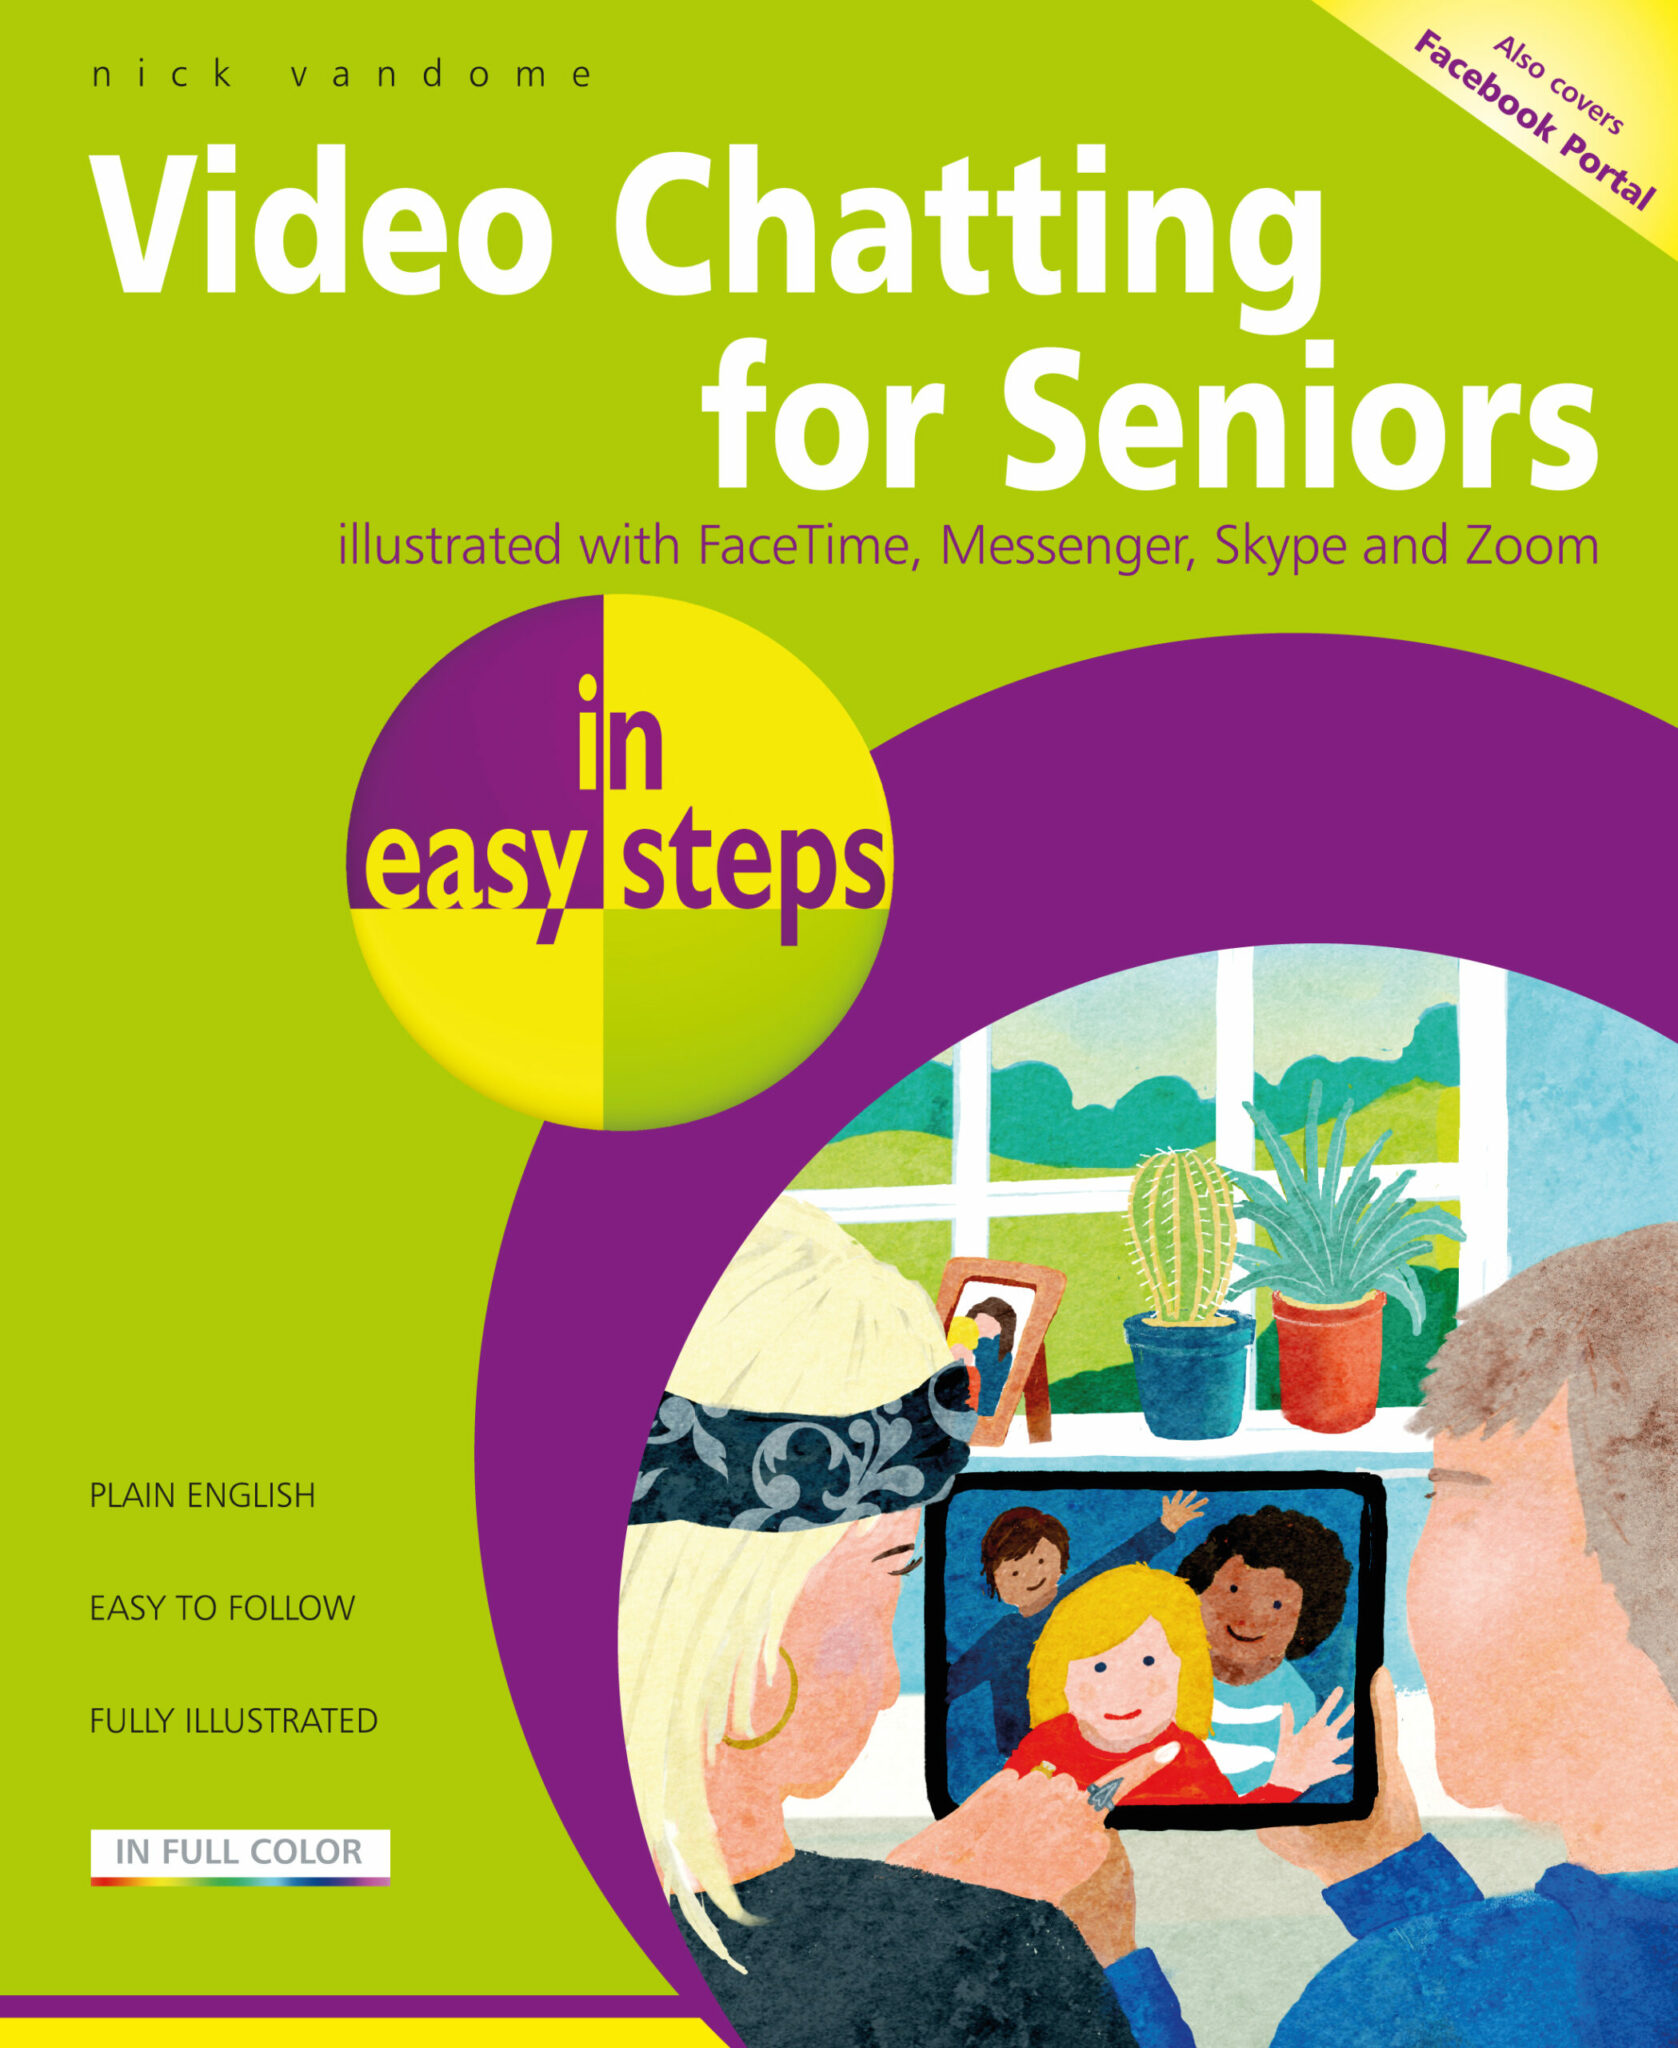 Video Chatting for Seniors in easy steps 9781840789324||Video Chatting for Seniors in easy steps 9781840789324||Video Chatting for Seniors in easy steps 9781840789324